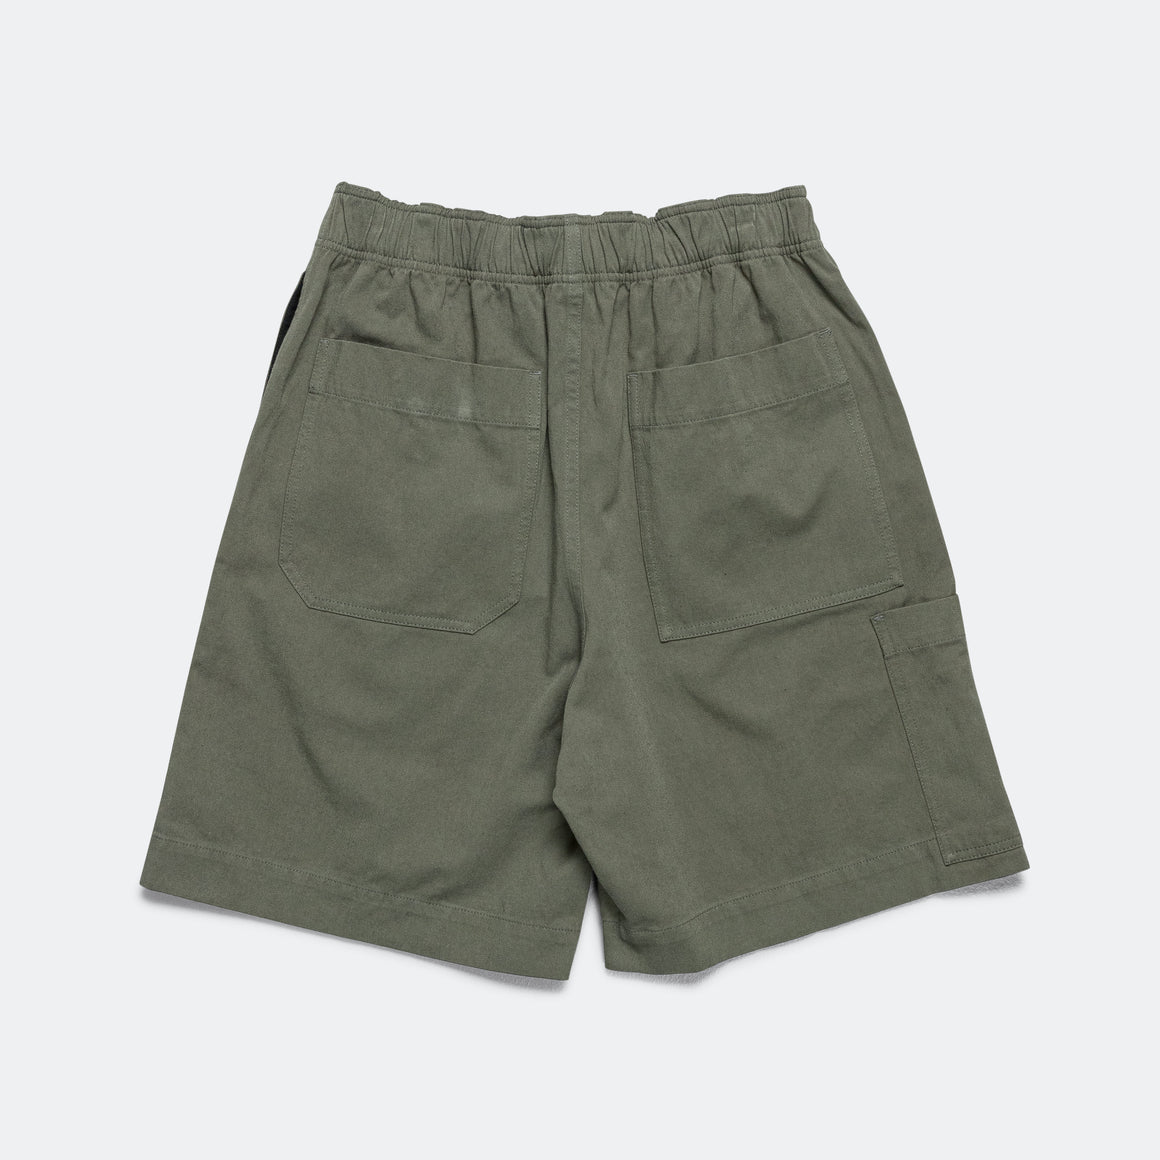 MHL. - Pull Up Shorts - Uniform Green Cotton Hemp Twill (LBS) - UP THERE